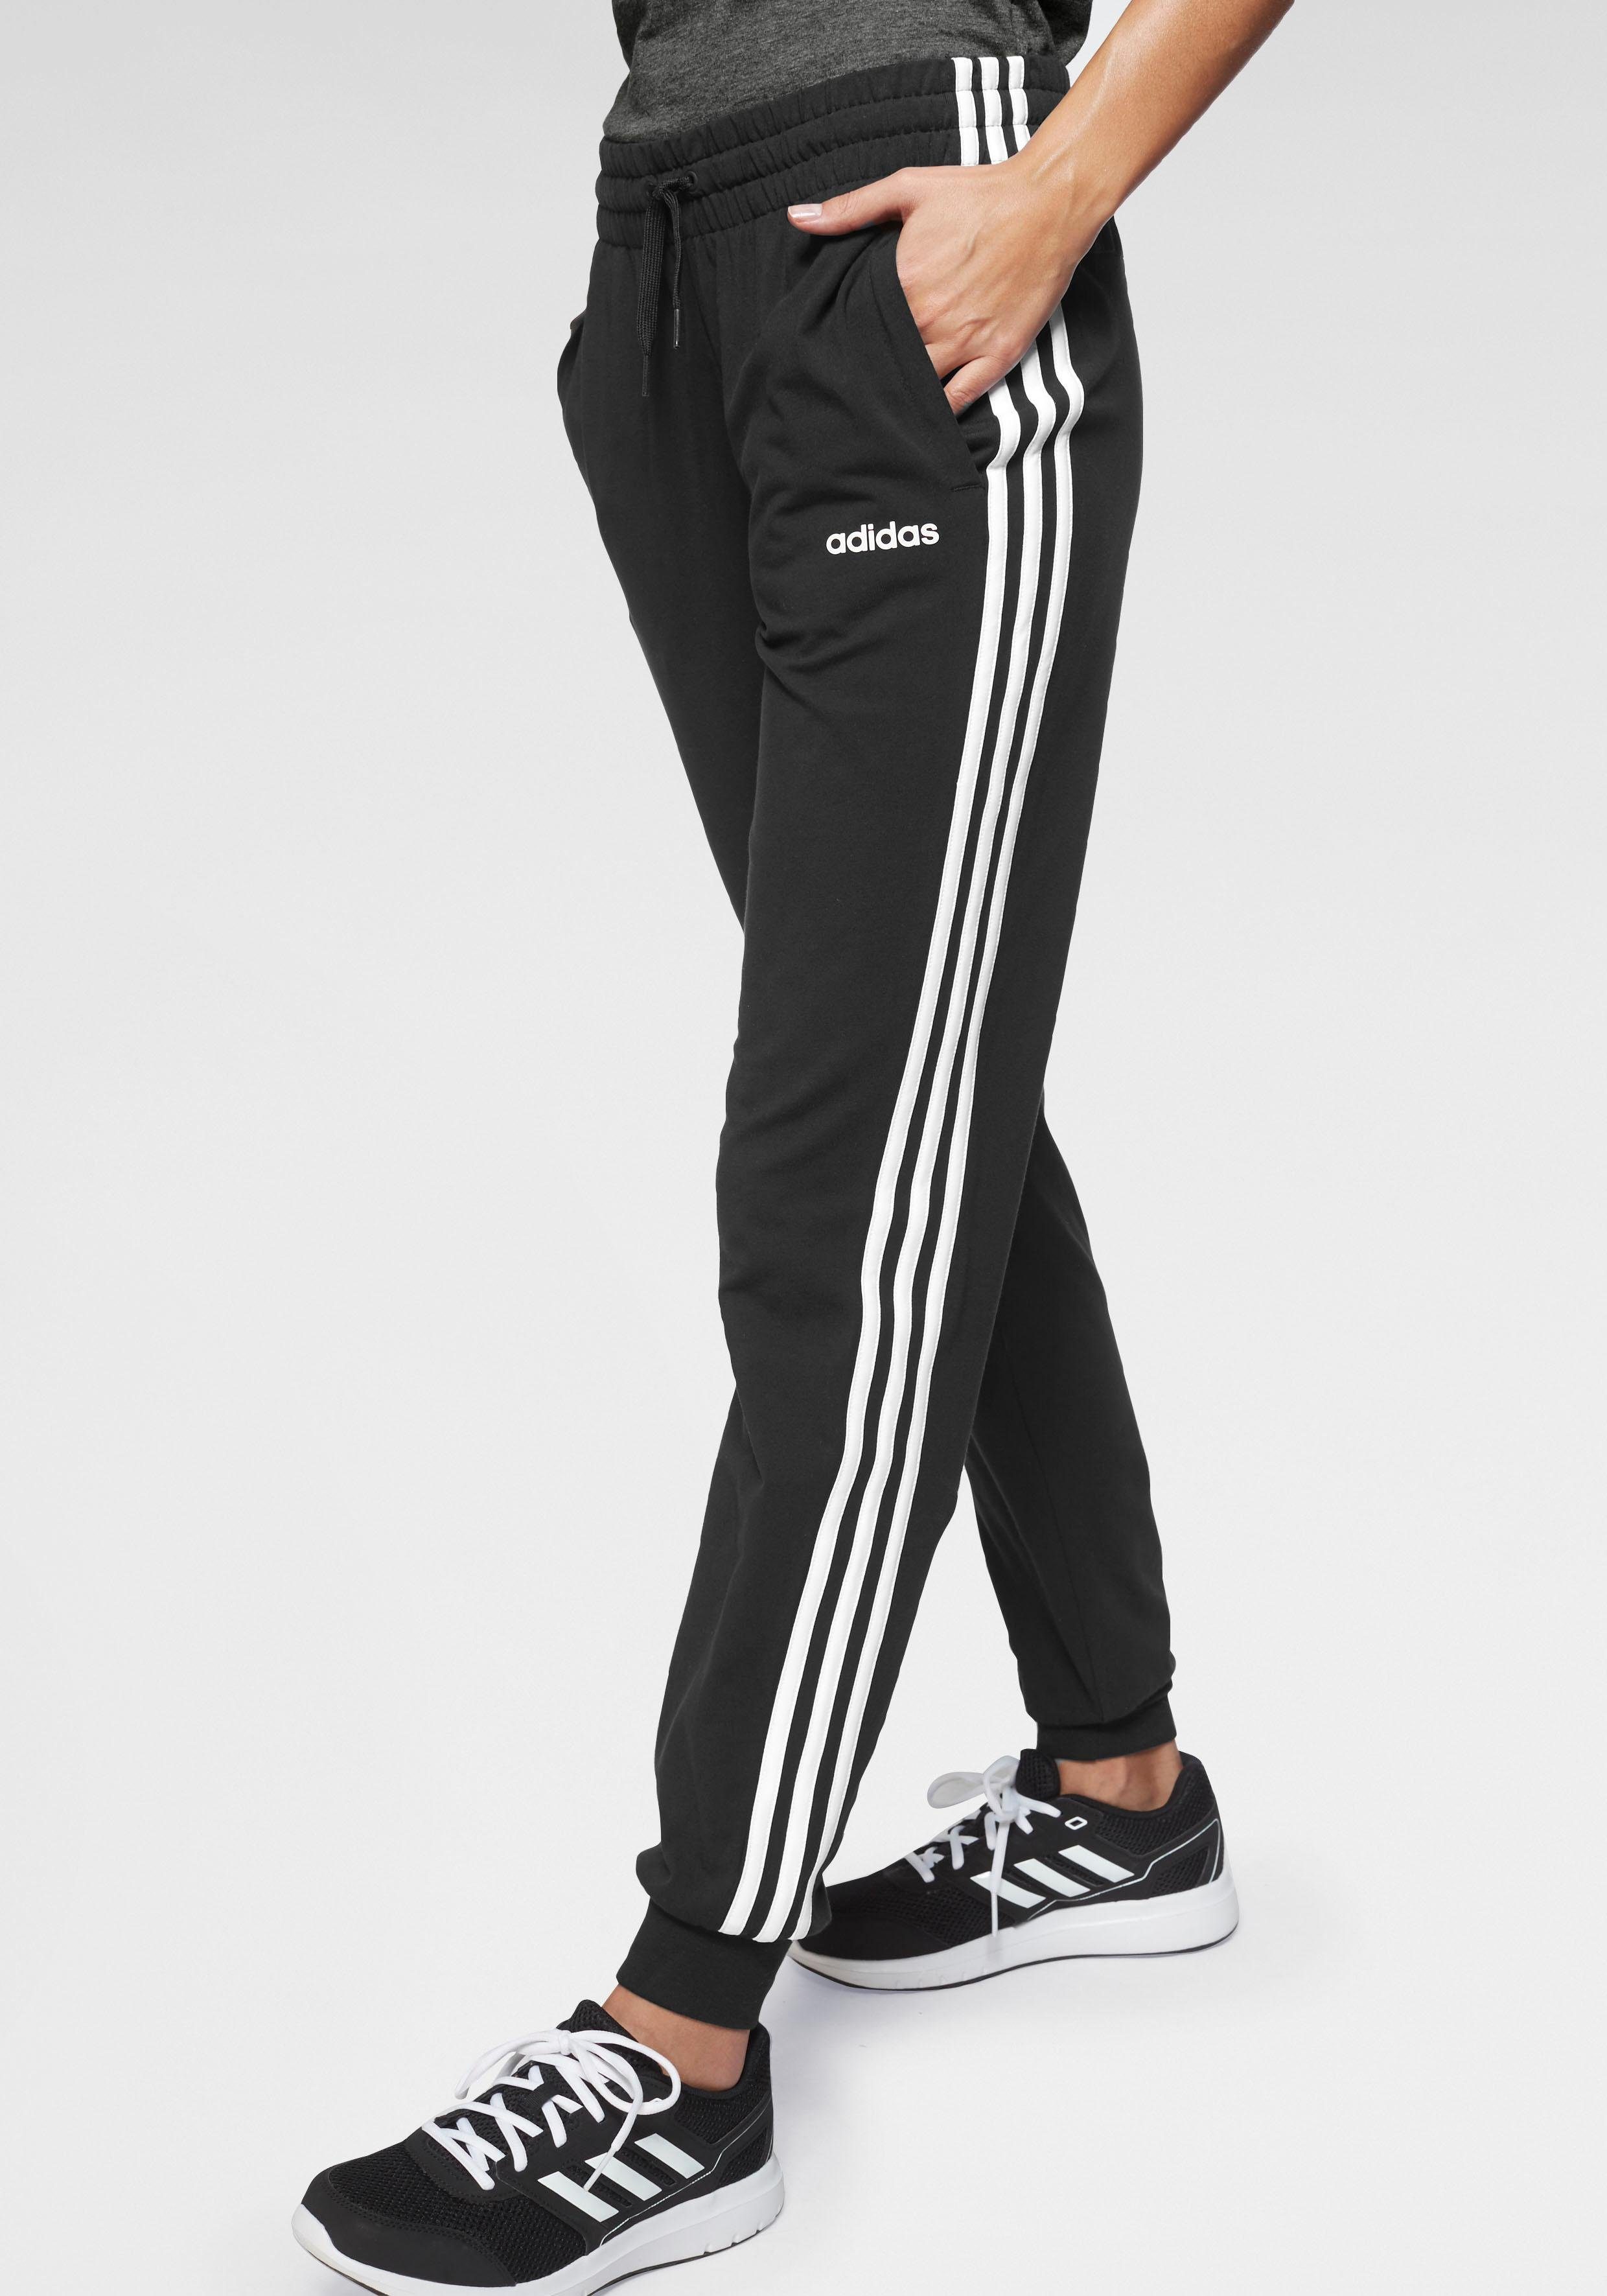 adidas Performance Jogginghose »W E 3 STRIPES PANT SJ« online kaufen | OTTO